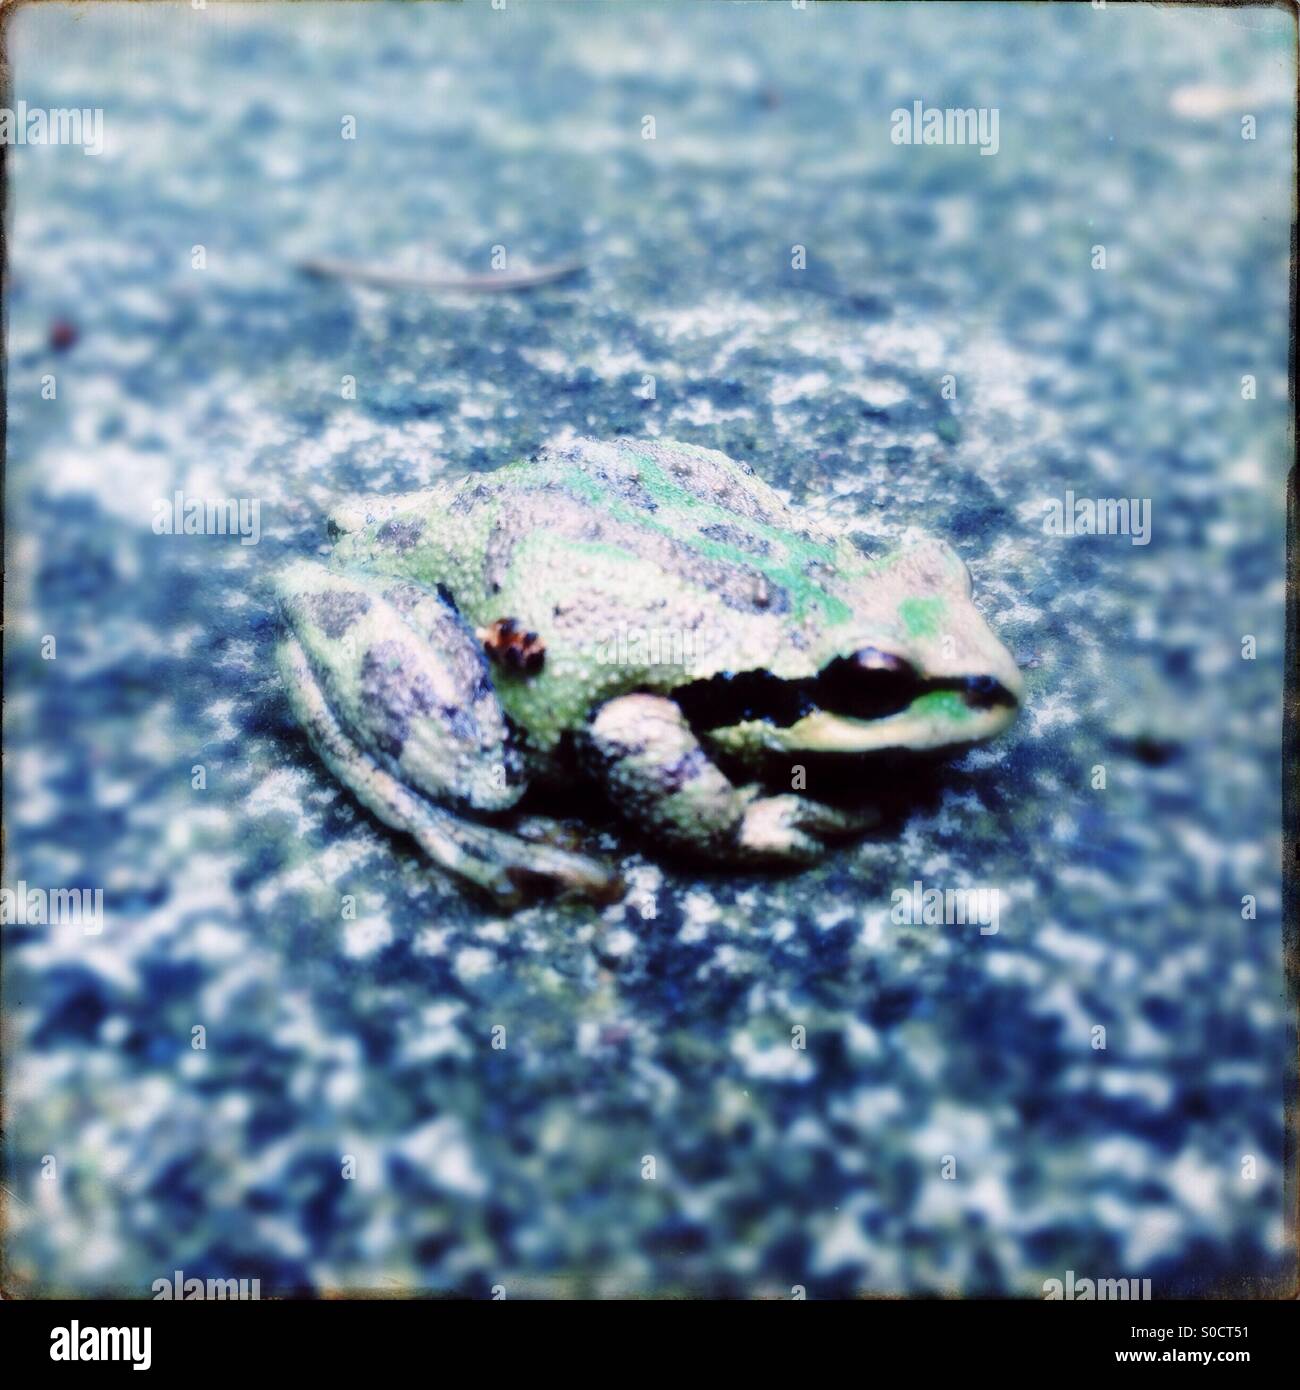 Frog on pavement Stock Photo